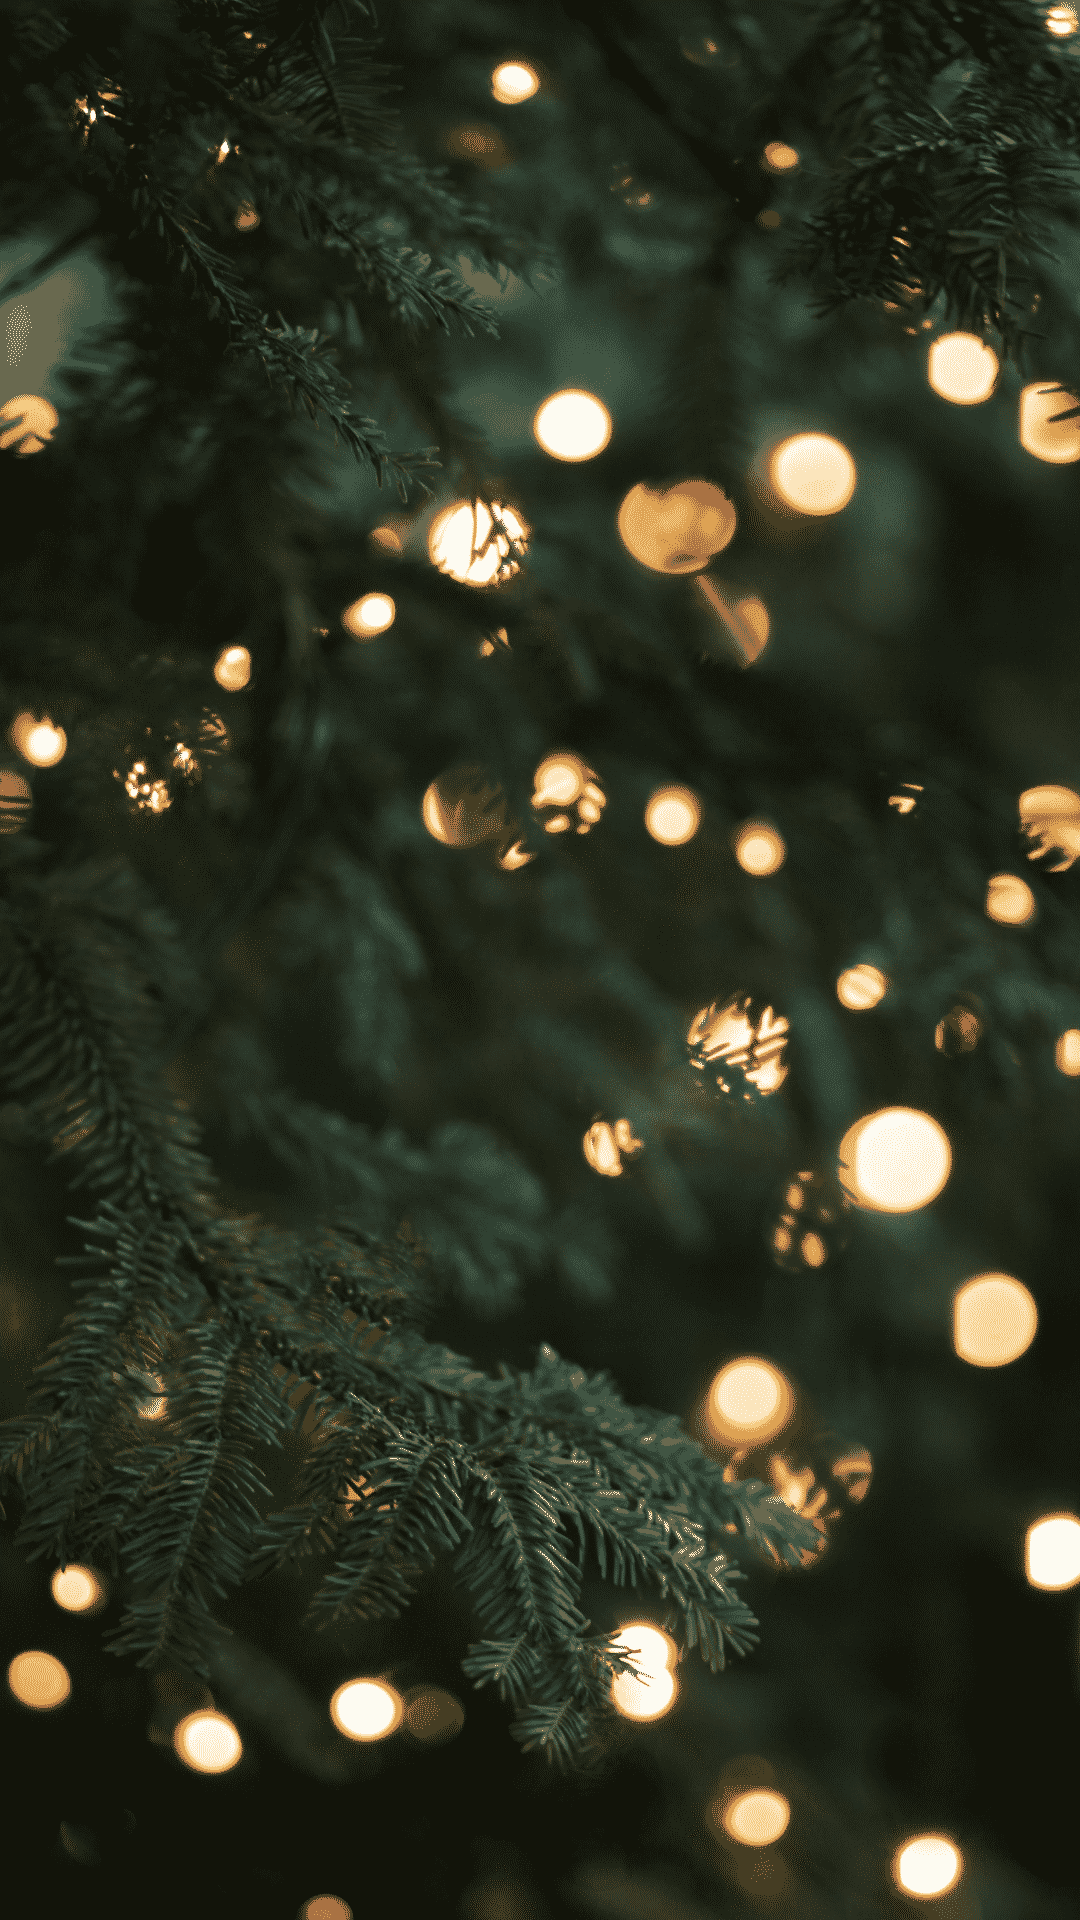  Winter Weihnachten Hintergrundbild 1080x1920. FREE Aesthetic Christmas Wallpaper For A Festive Phone